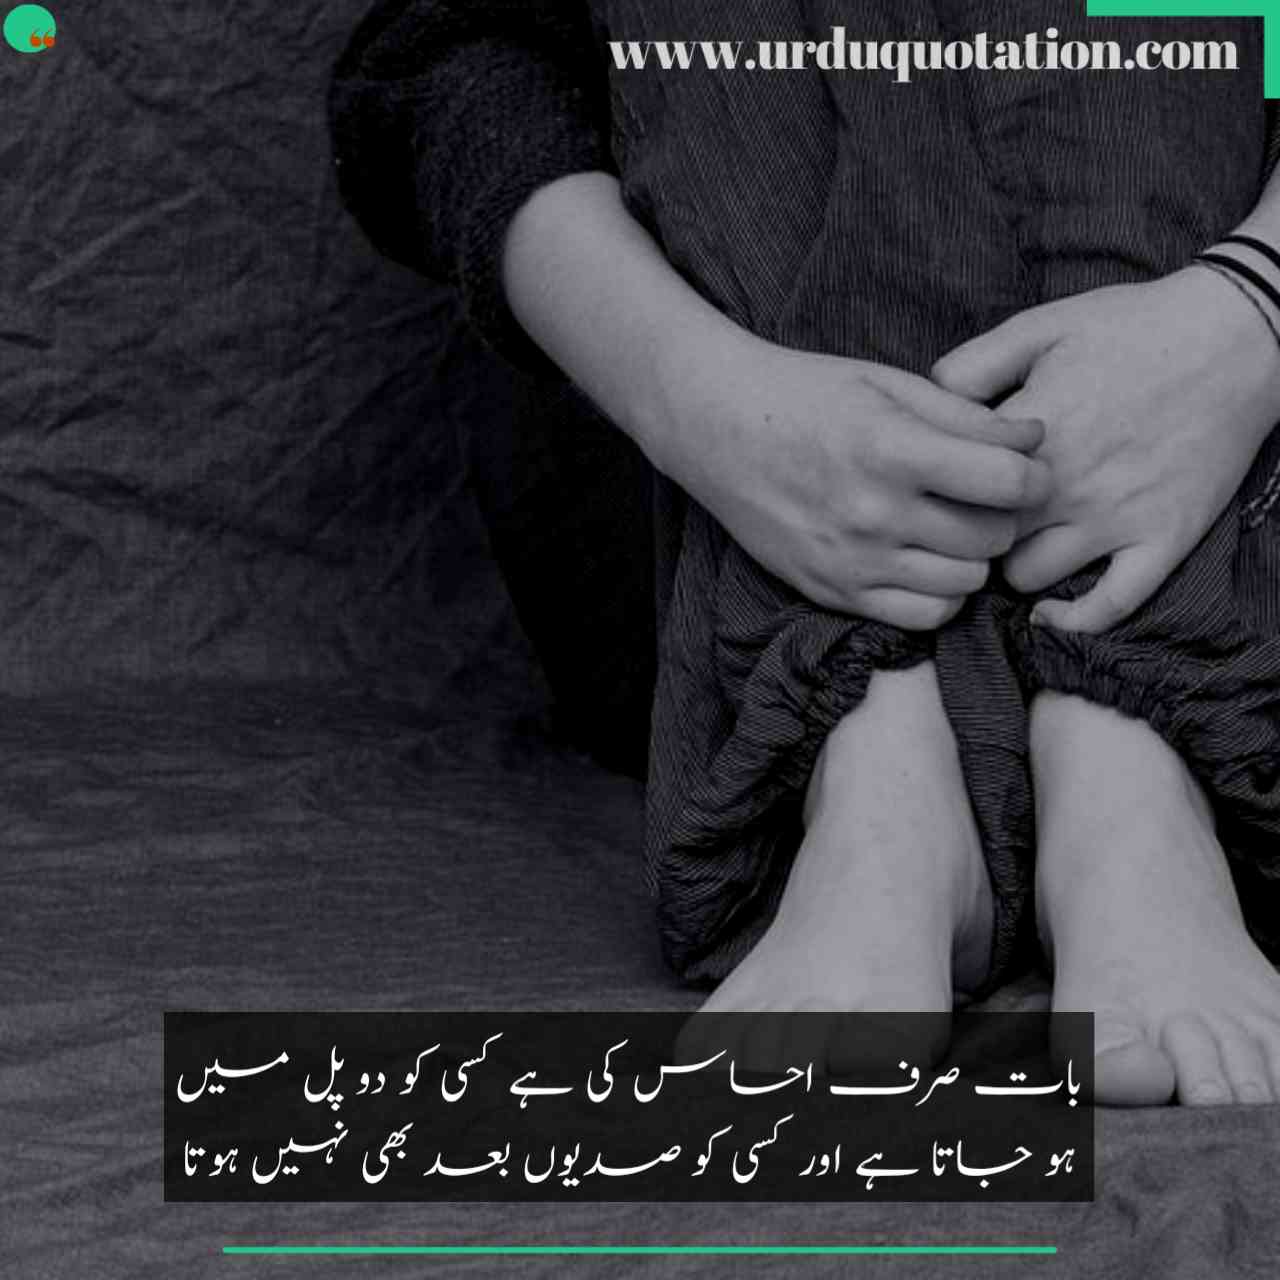 Sad Quotes About Love In Urdu